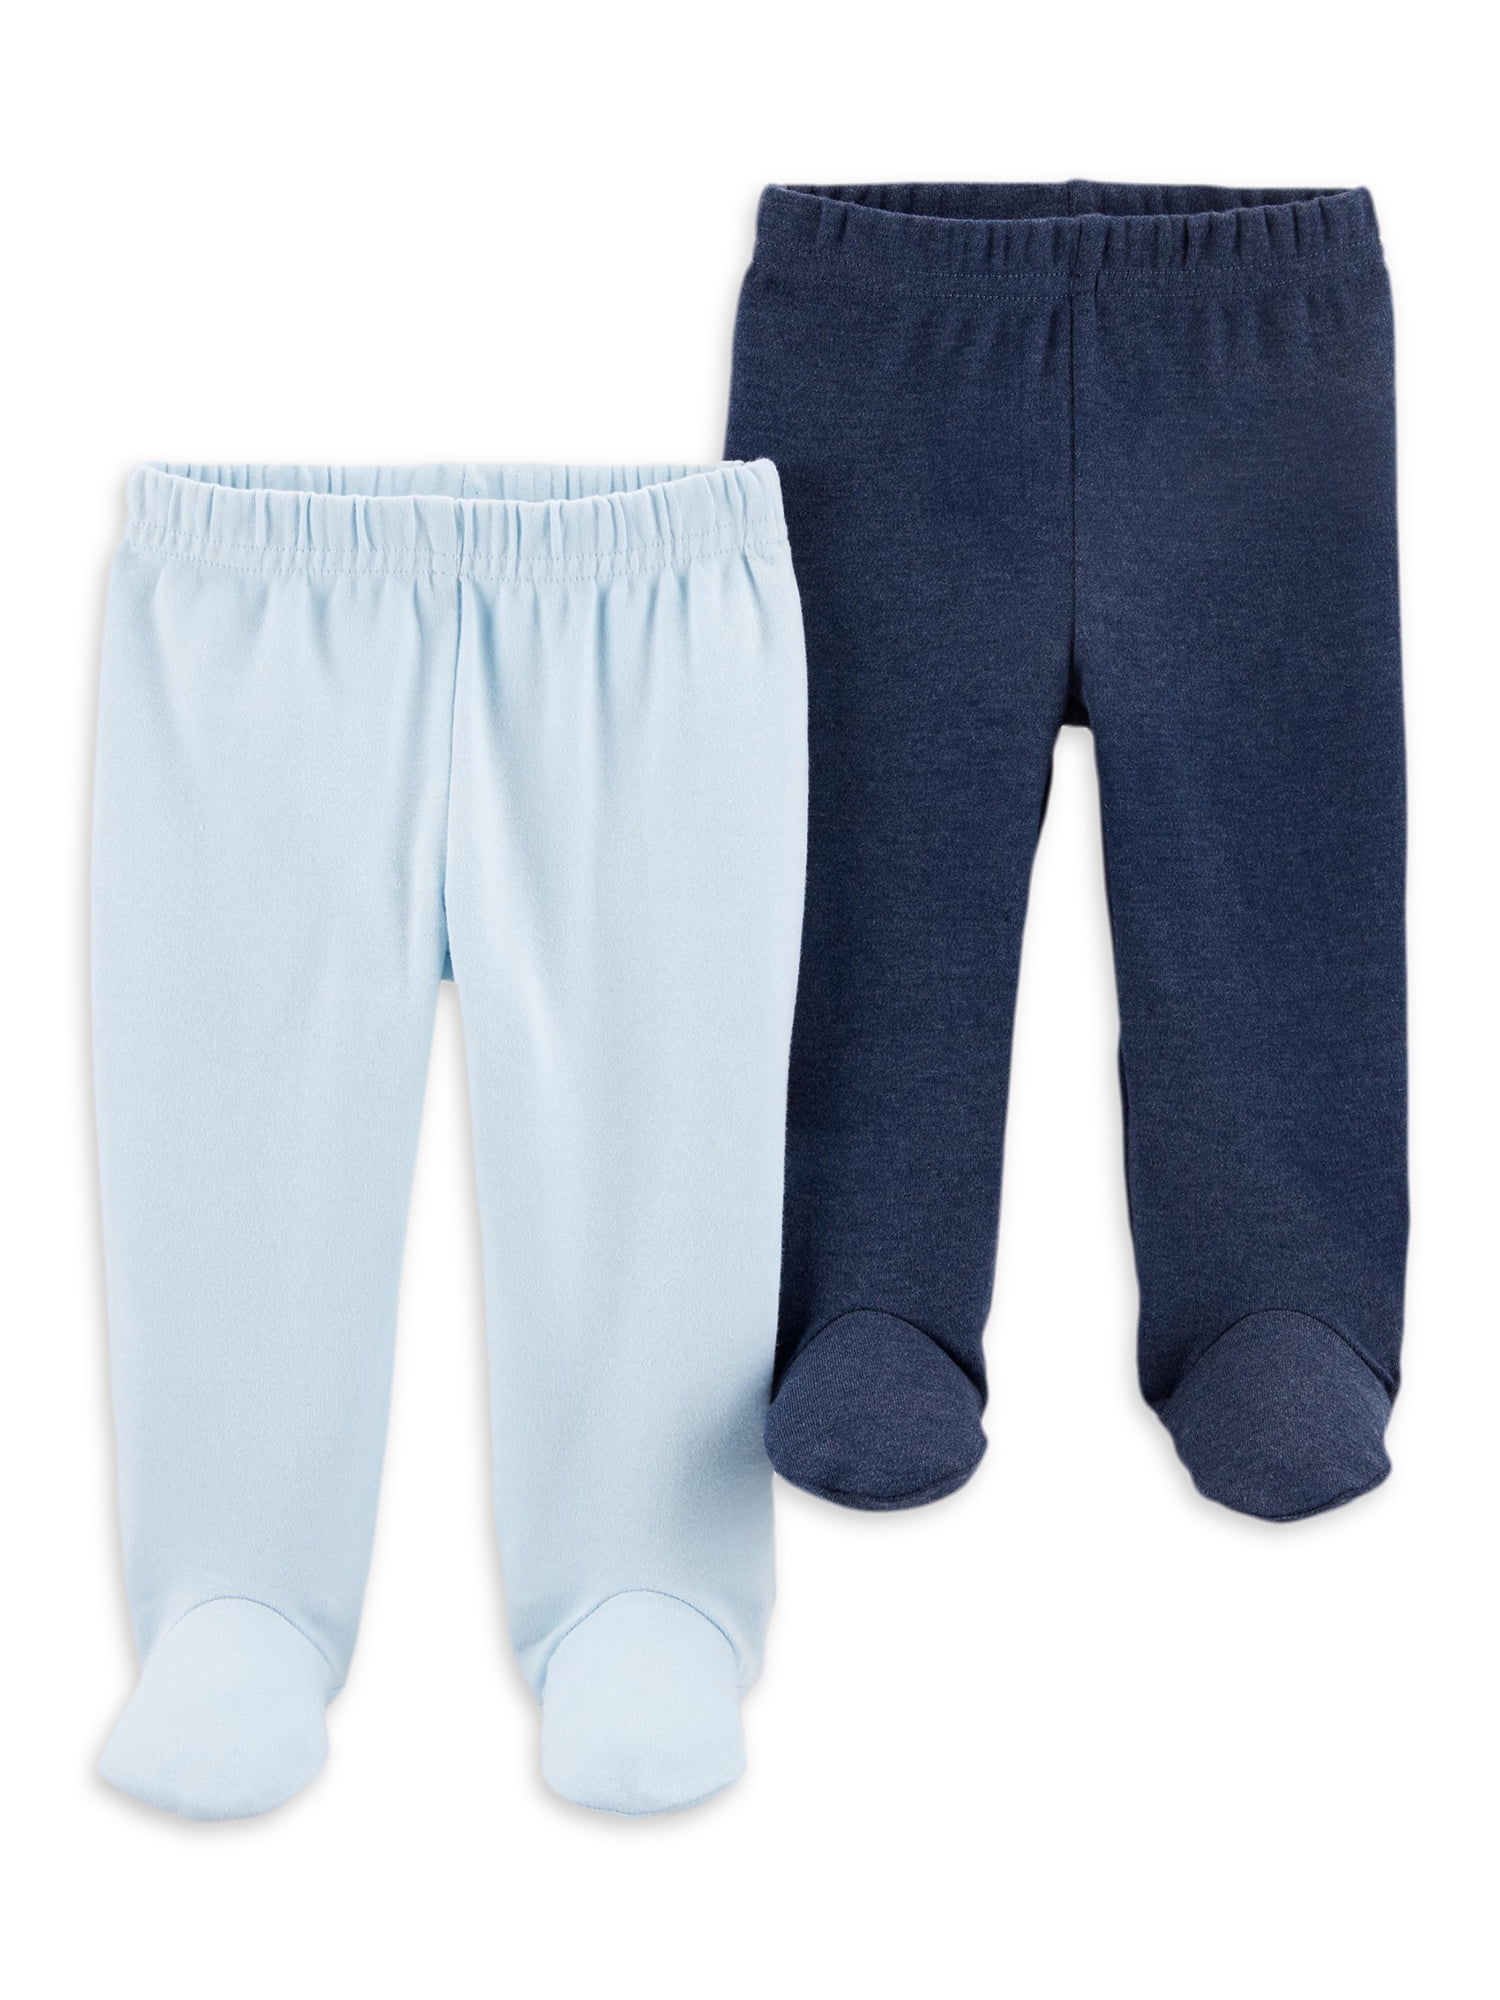 V-BLUE Baby Unisex Pajama Sleepwear Bibs/T-Shirt/Leggings/Jumpsuit/Dress 100% Orgainic Bio Cotton Newborn Blue/White Pajamas for 3-6 Months Girls Boys